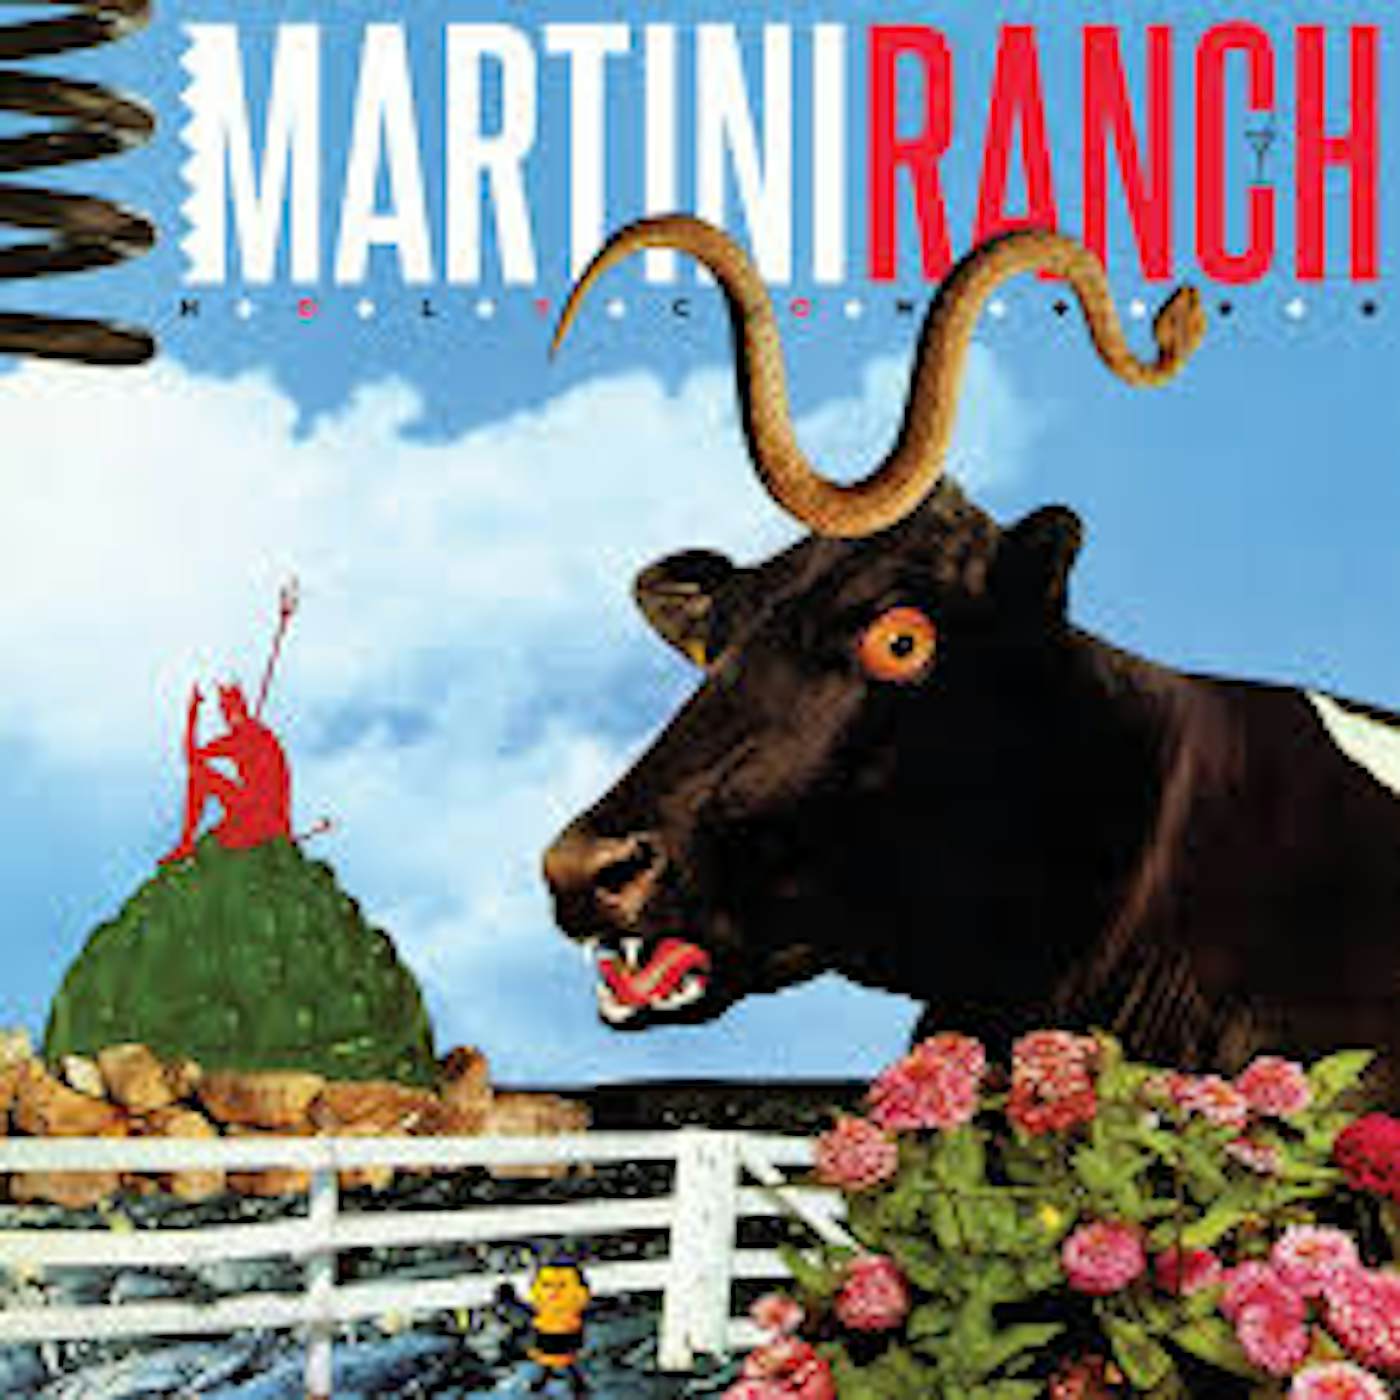 Martini Ranch Holy Cow Vinyl Record